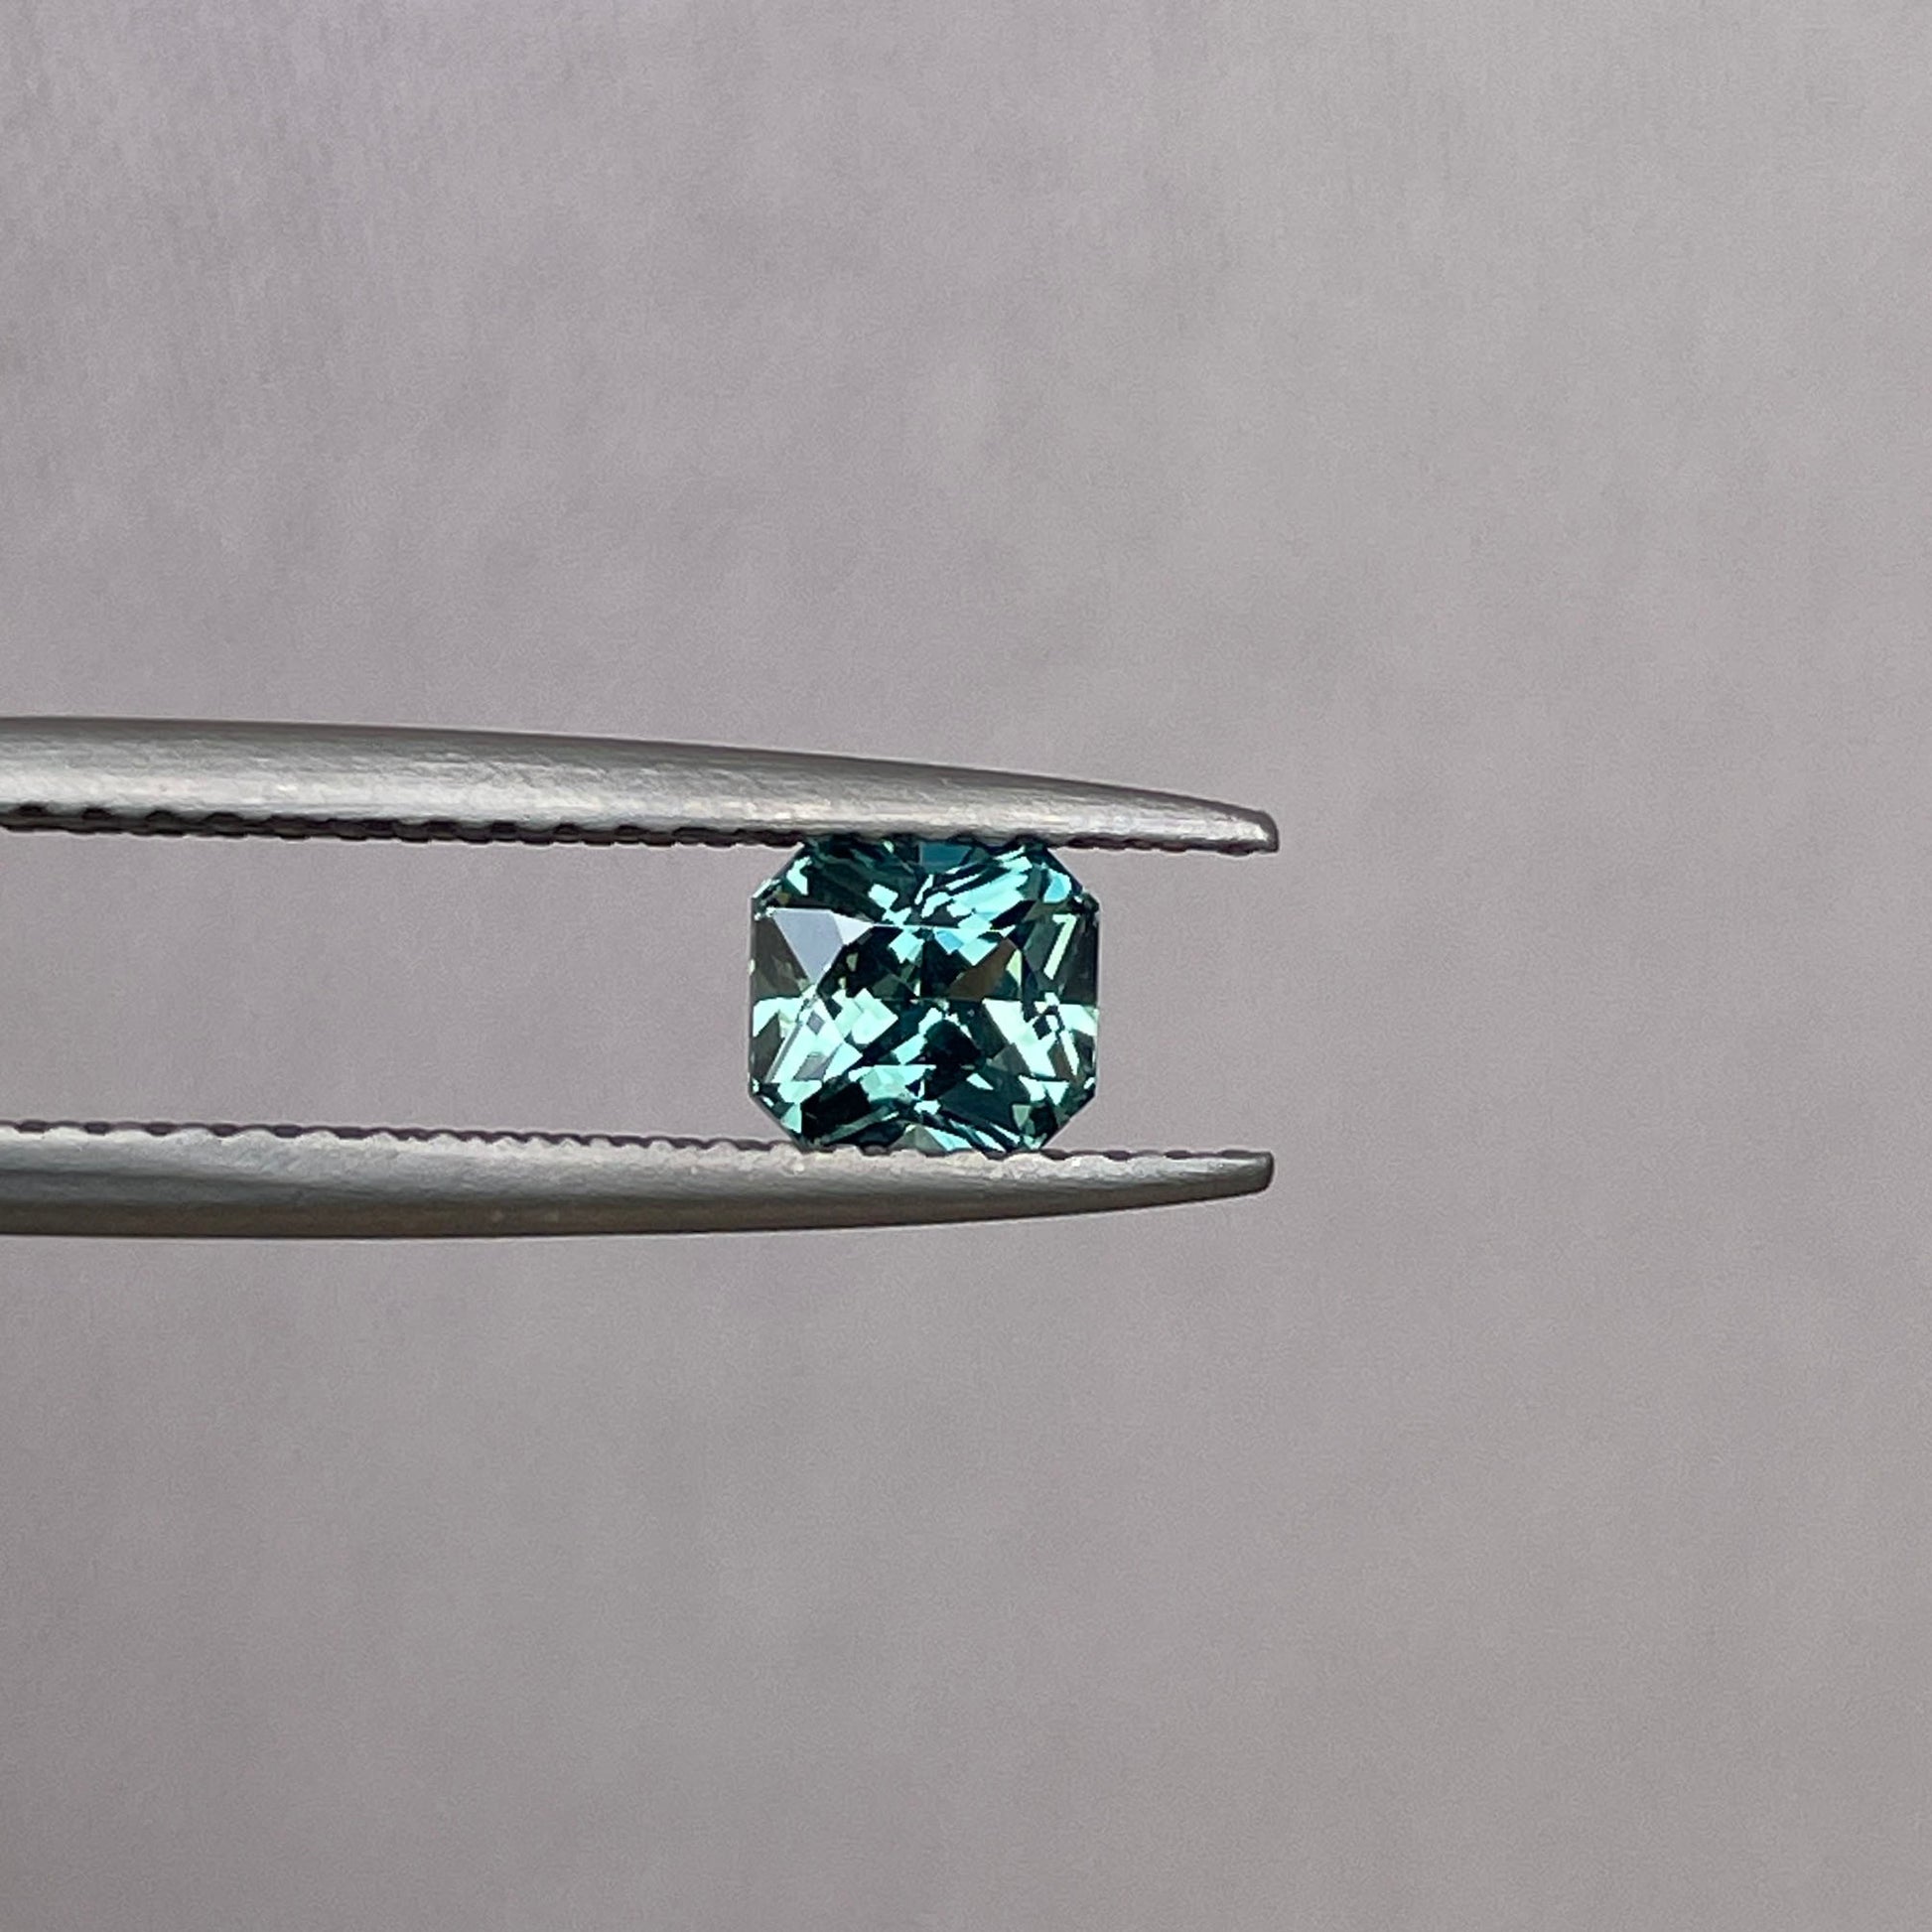 Greenish blue sapphire, 0.79 crt.